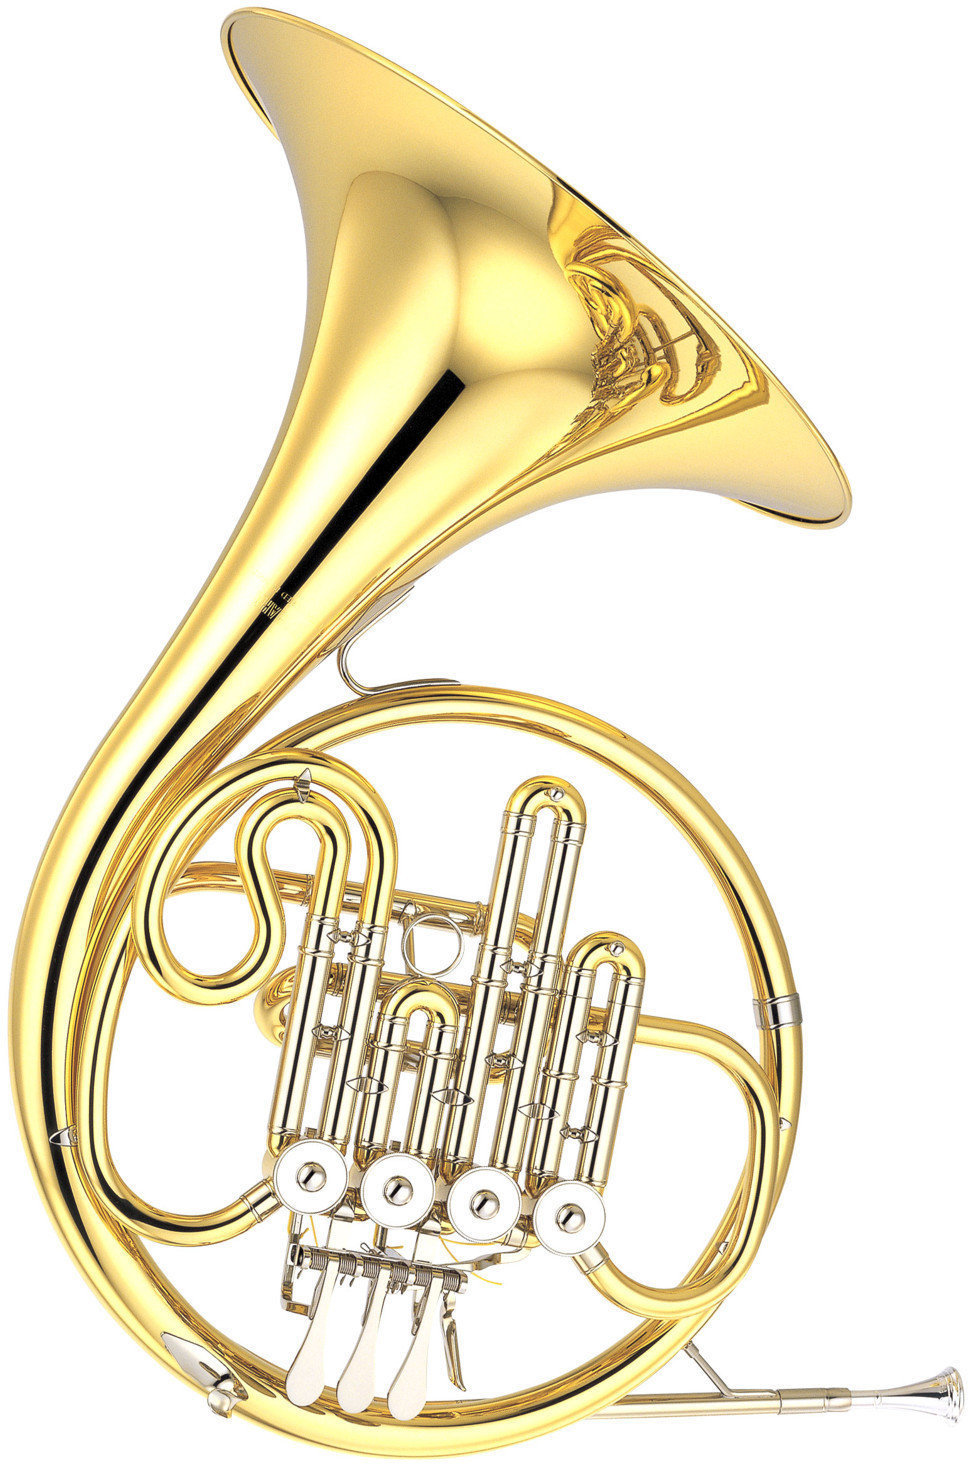 French Horn Yamaha YHR 322 II French Horn